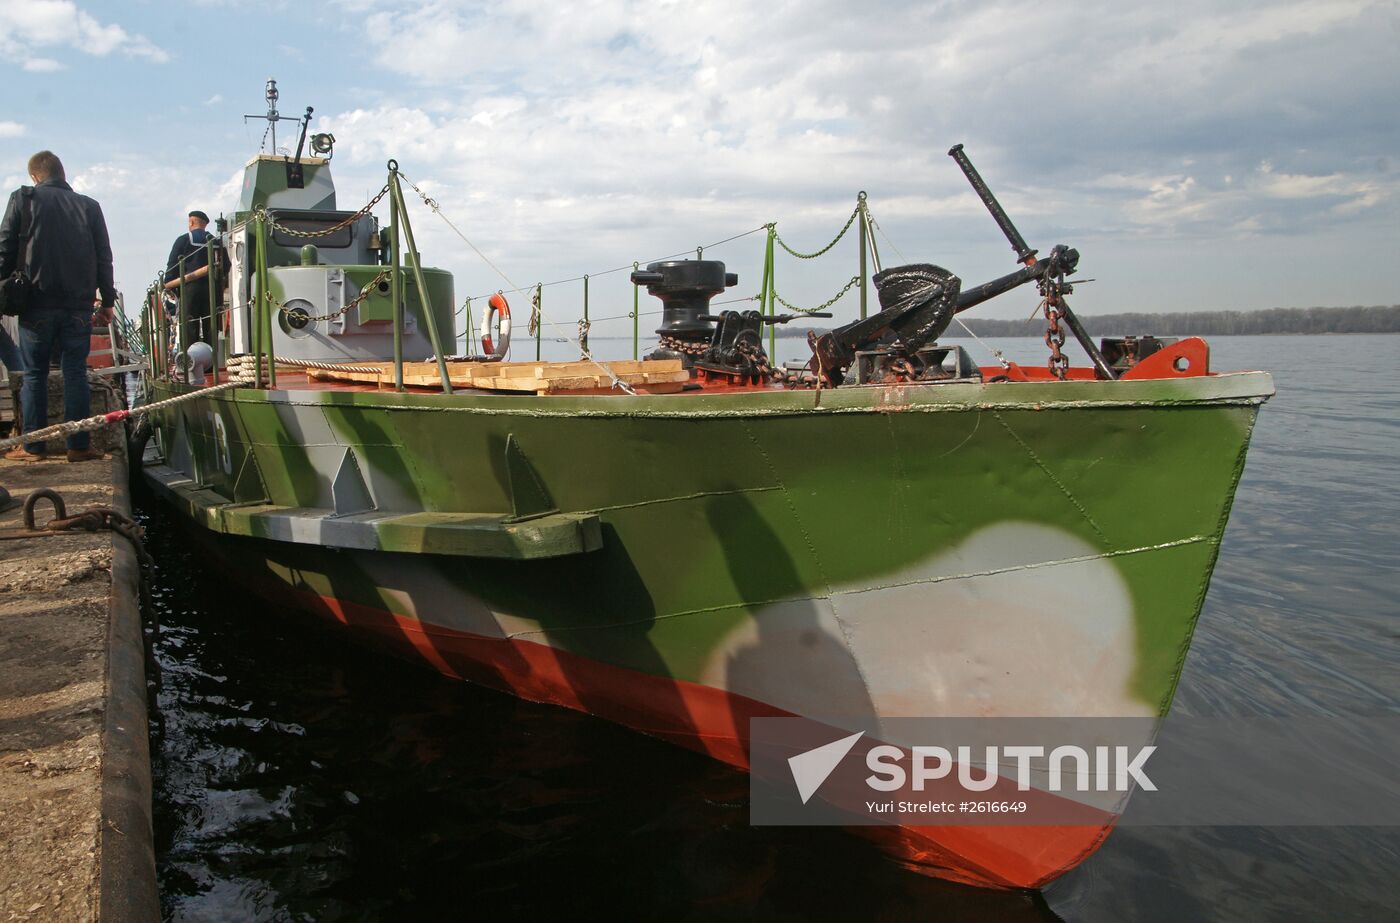 A BKA-73 armored speedboat / museum arrives in Samara